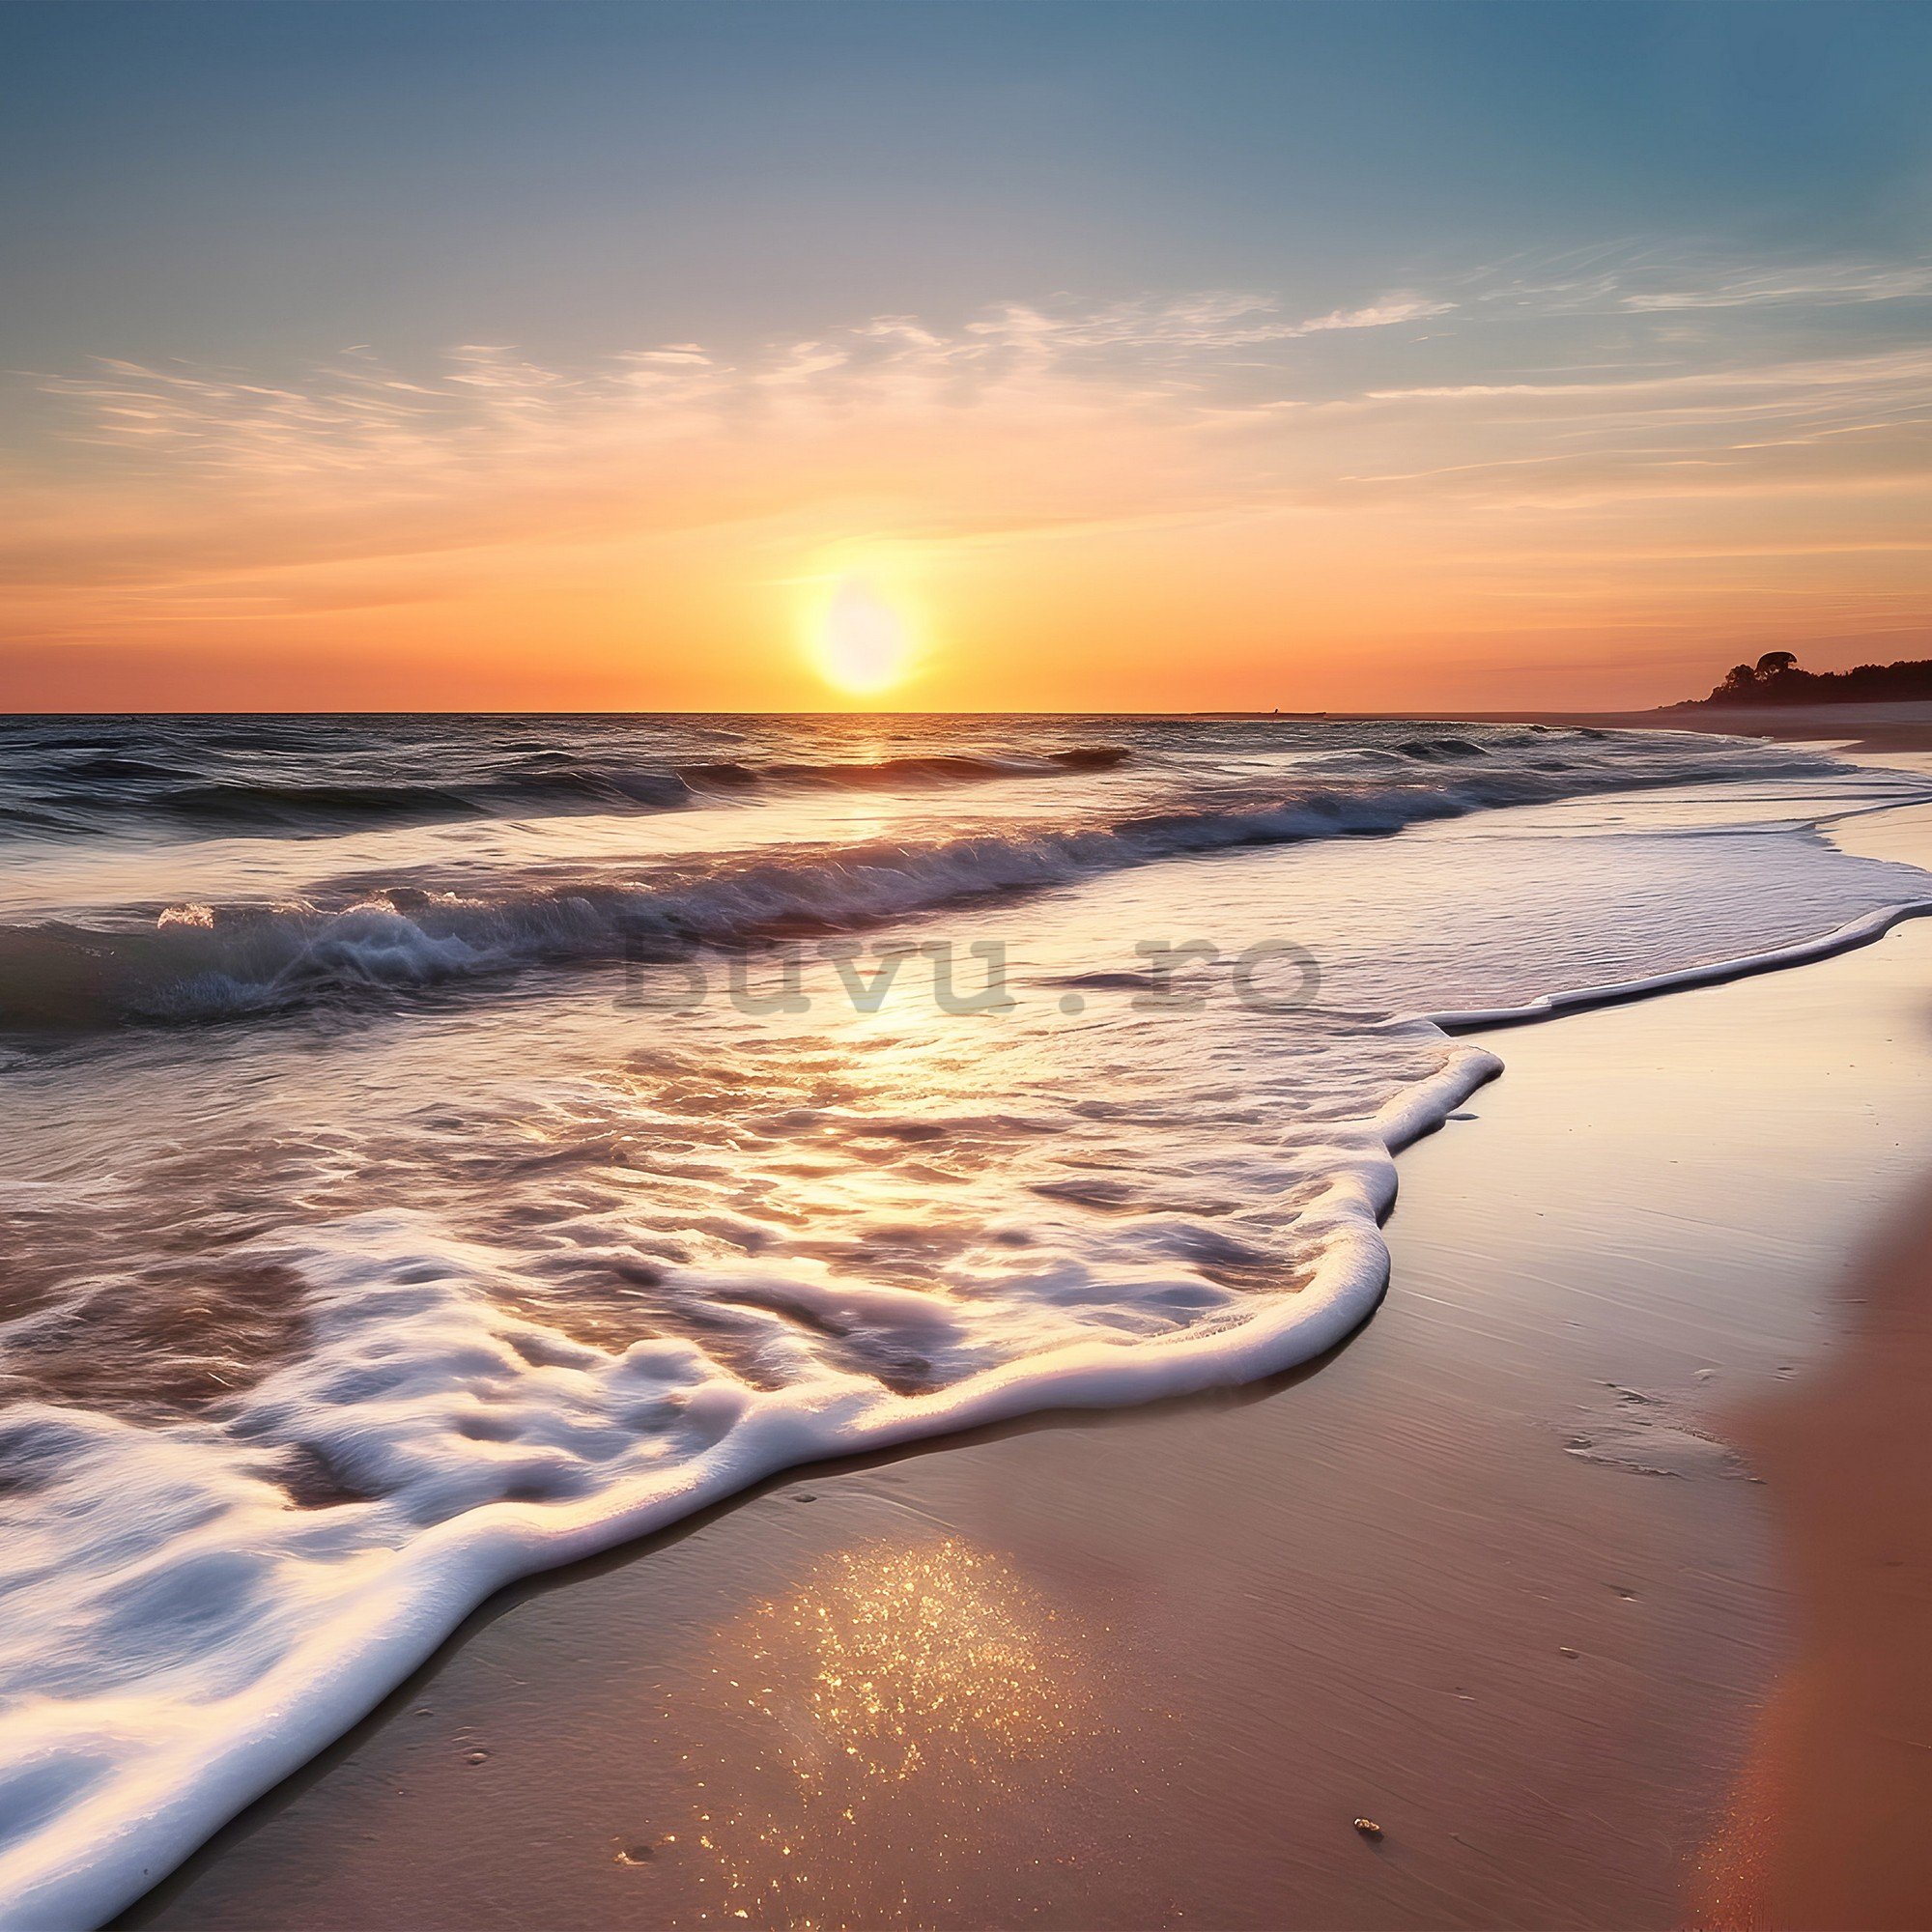 Fototapet vlies: Sea sunset - 312x219cm